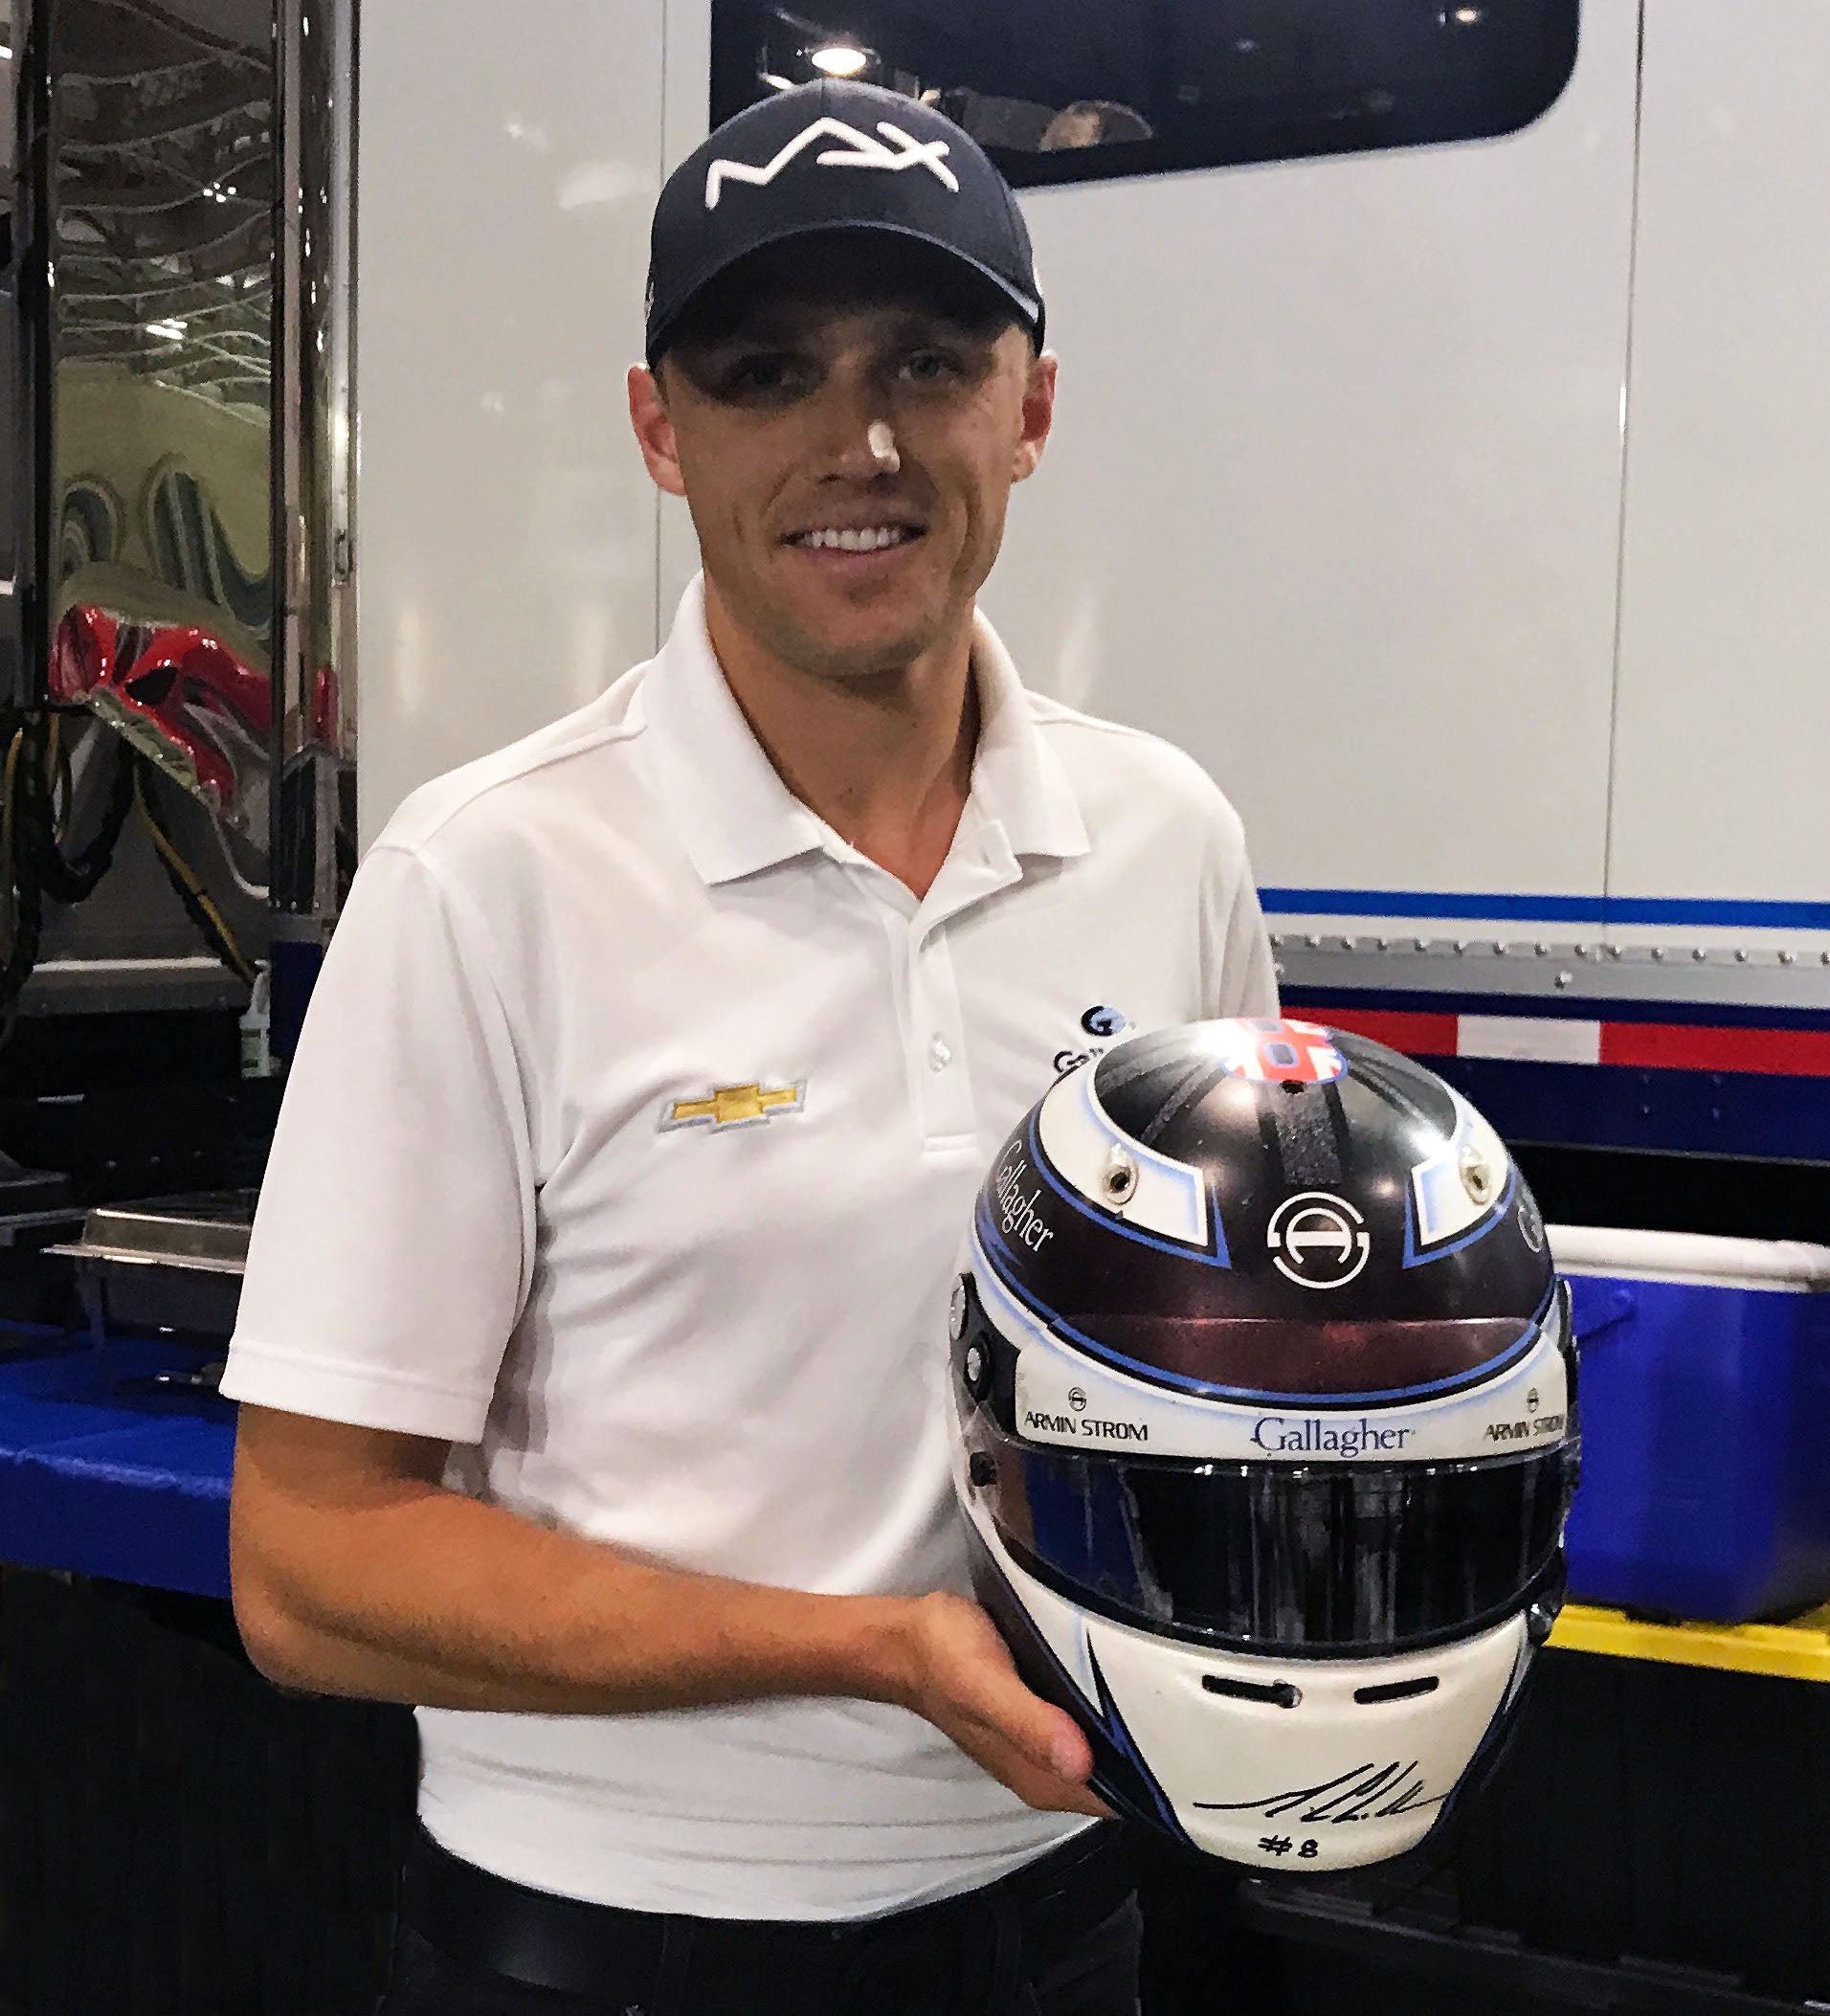 2017/18 Max Chilton Signed Race Used IndyCar Helmet